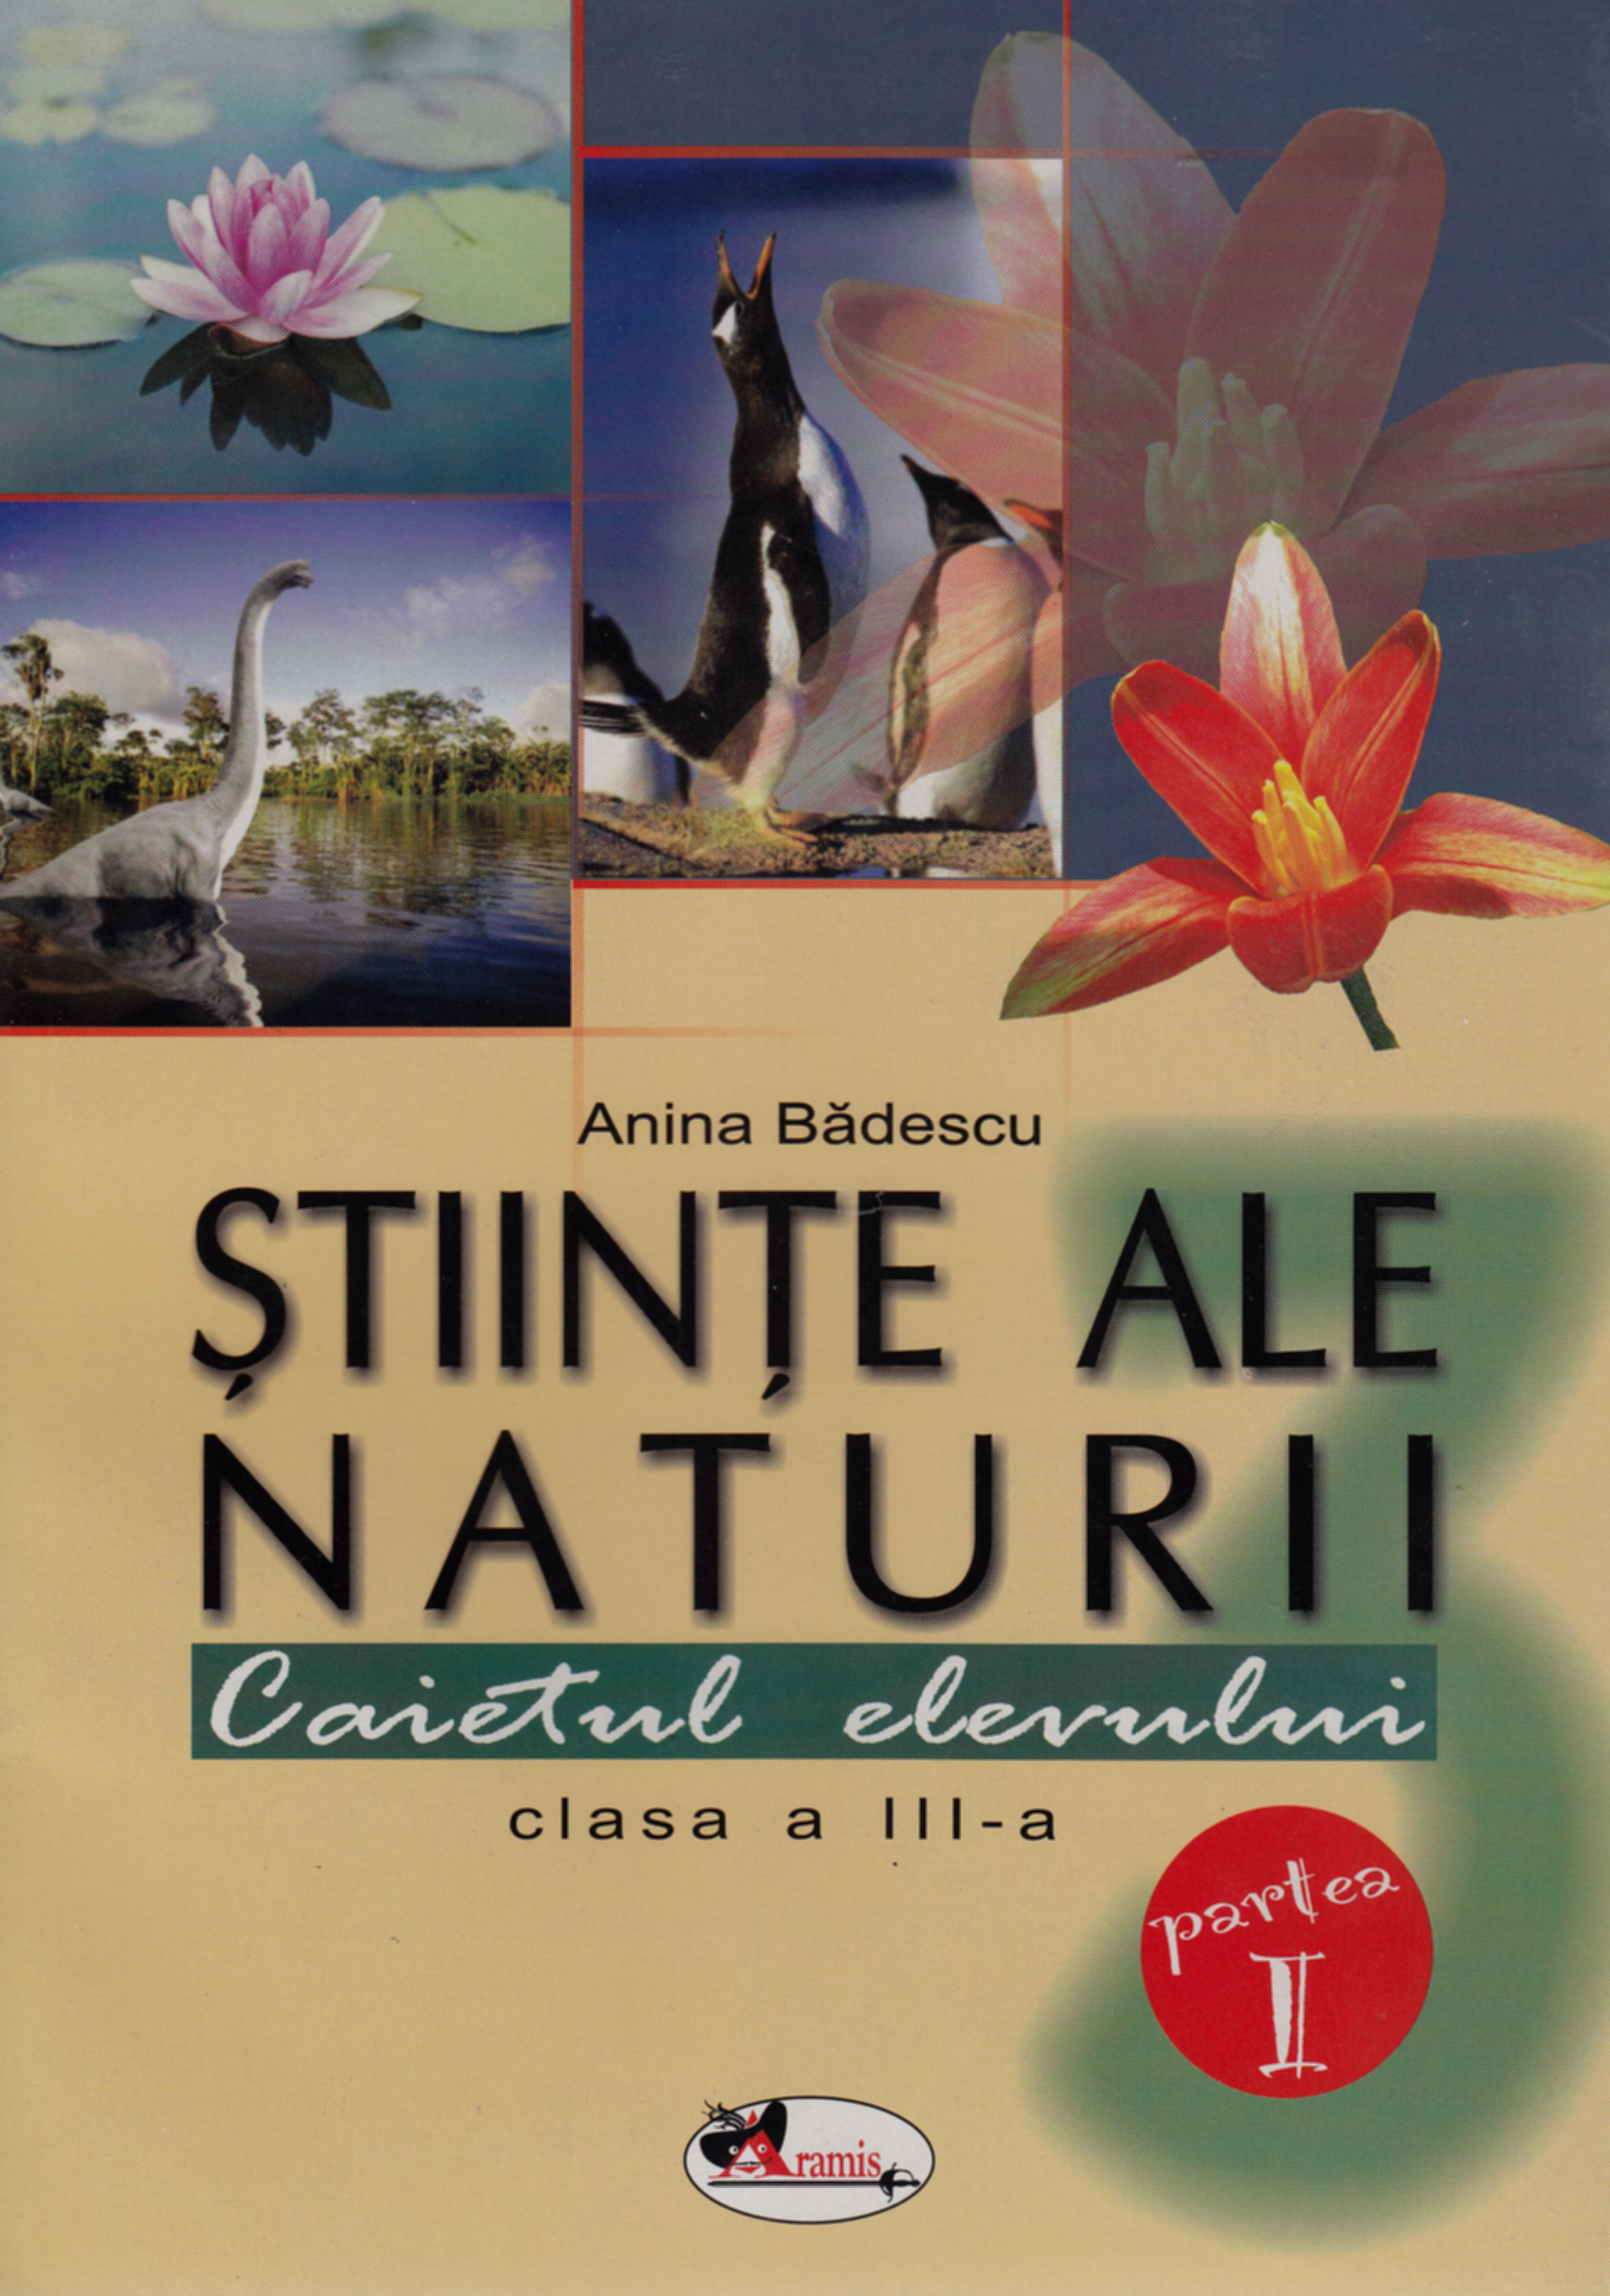 Stiinte ale naturii clasa 3 caiet partea I - Anina Badescu